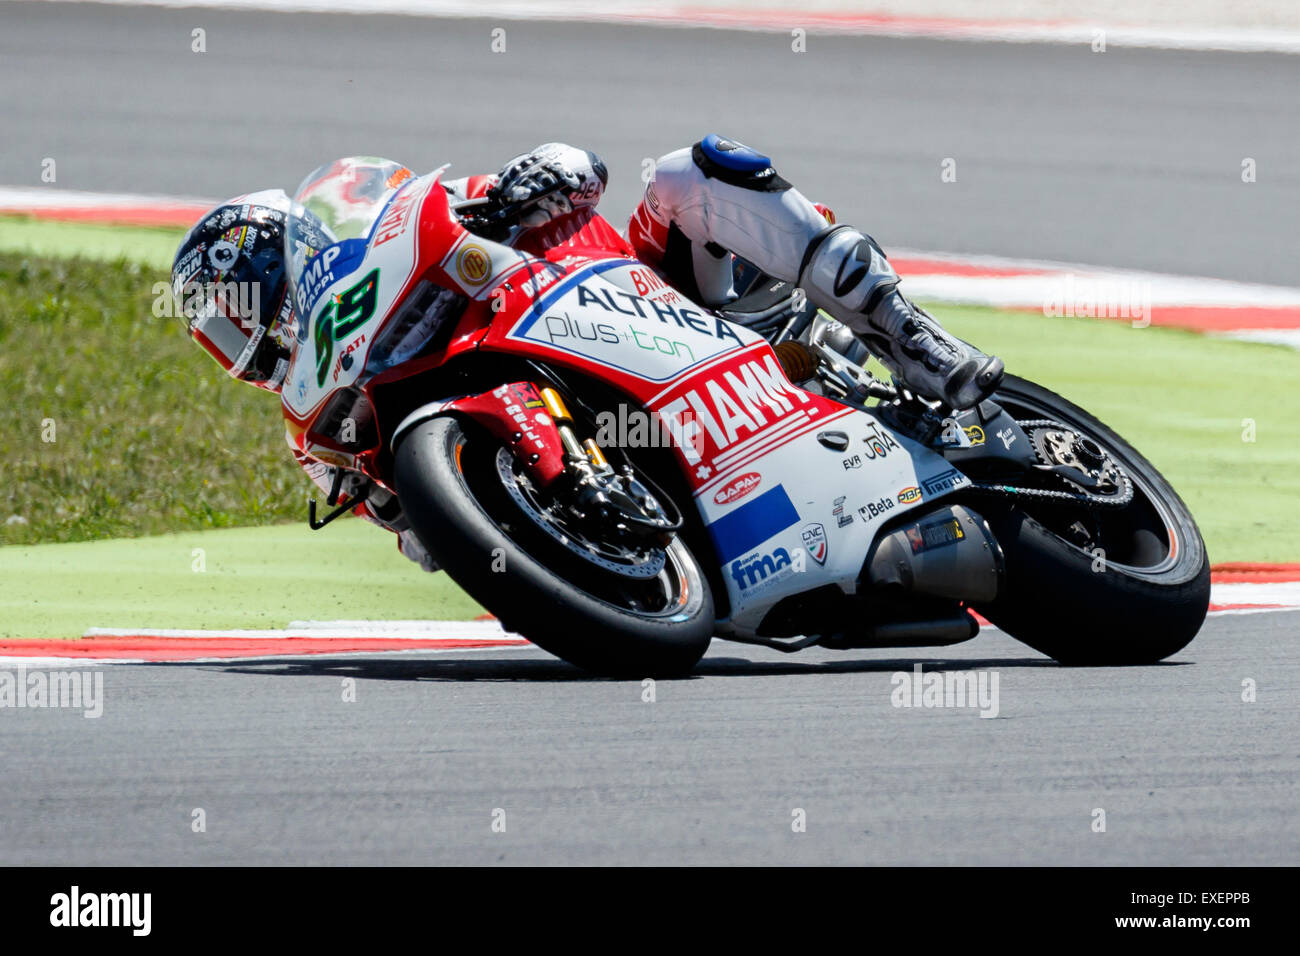 Misano Adriatico, Italy - June 21, 2015: Ducati Panigale R of Althea Racing Team, driven by CANEPA Niccolò Stock Photo